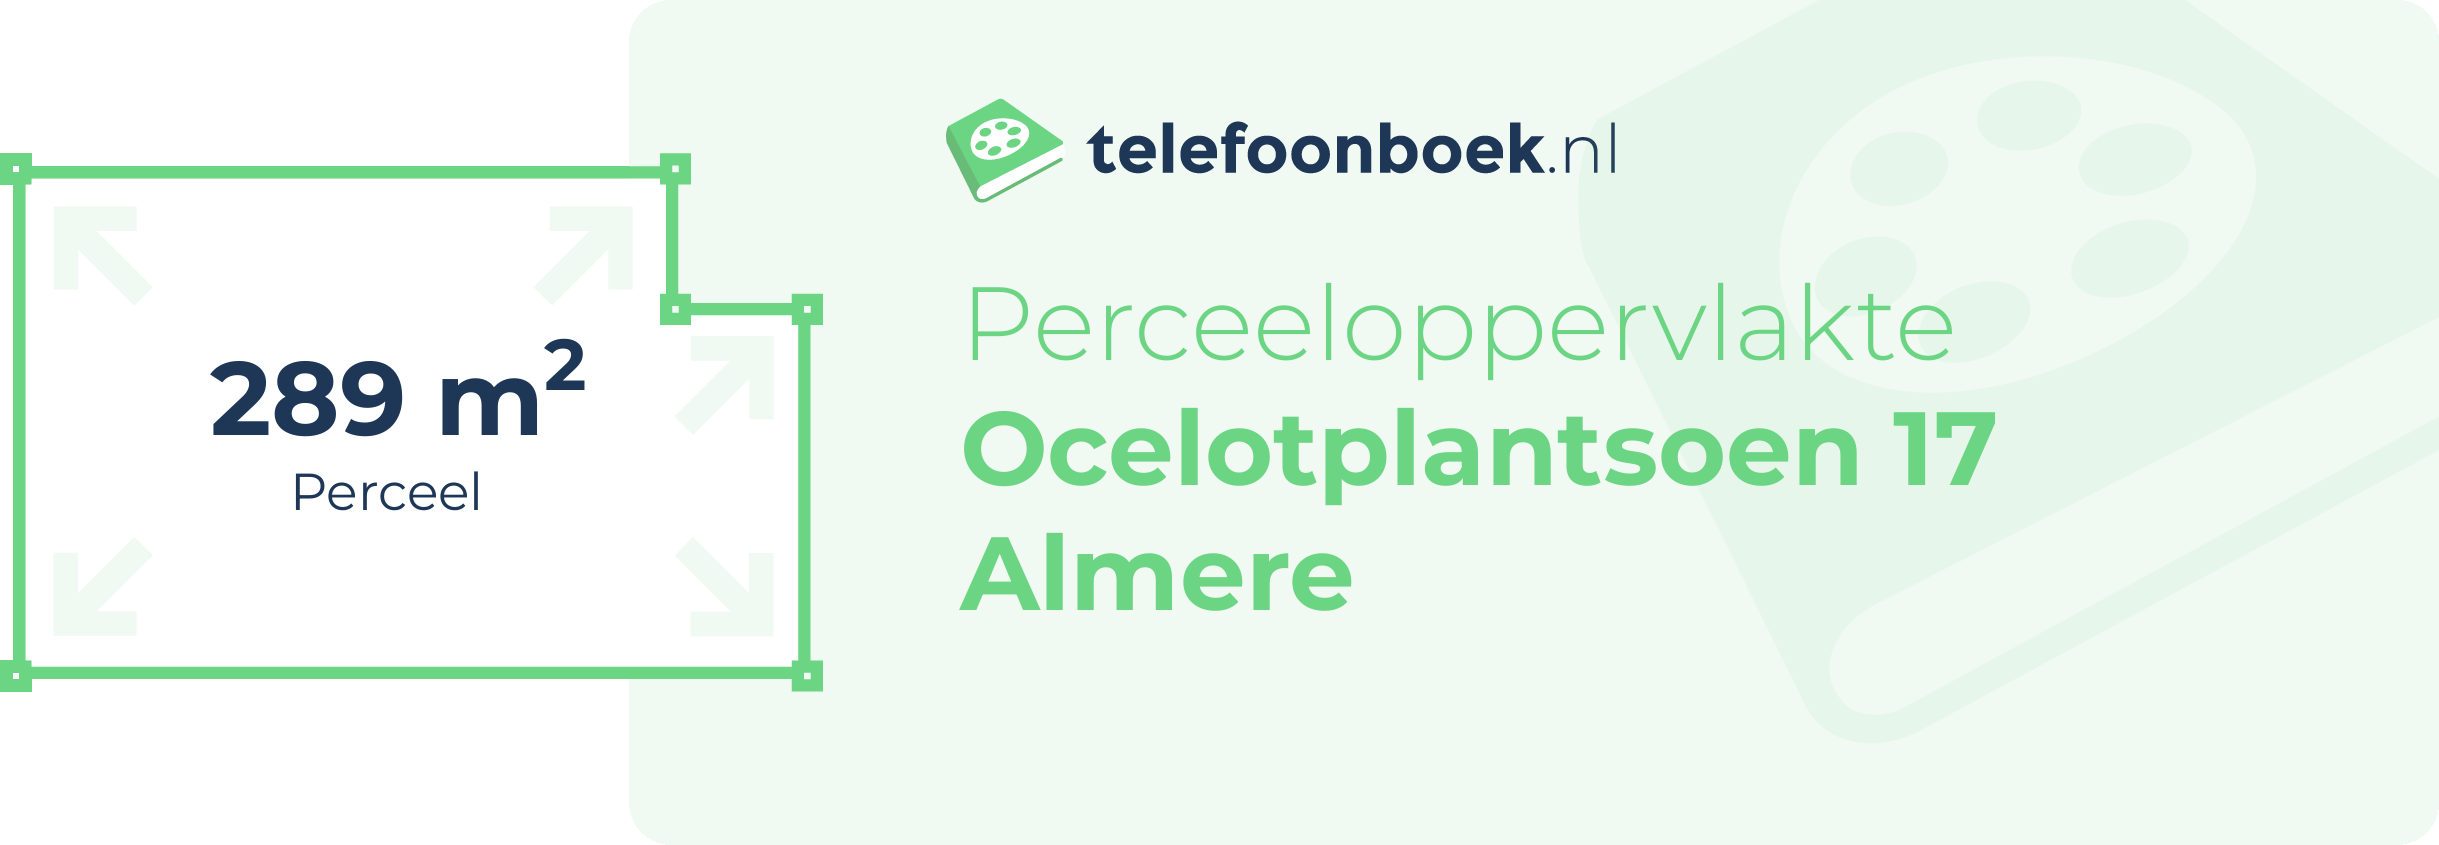 Perceeloppervlakte Ocelotplantsoen 17 Almere